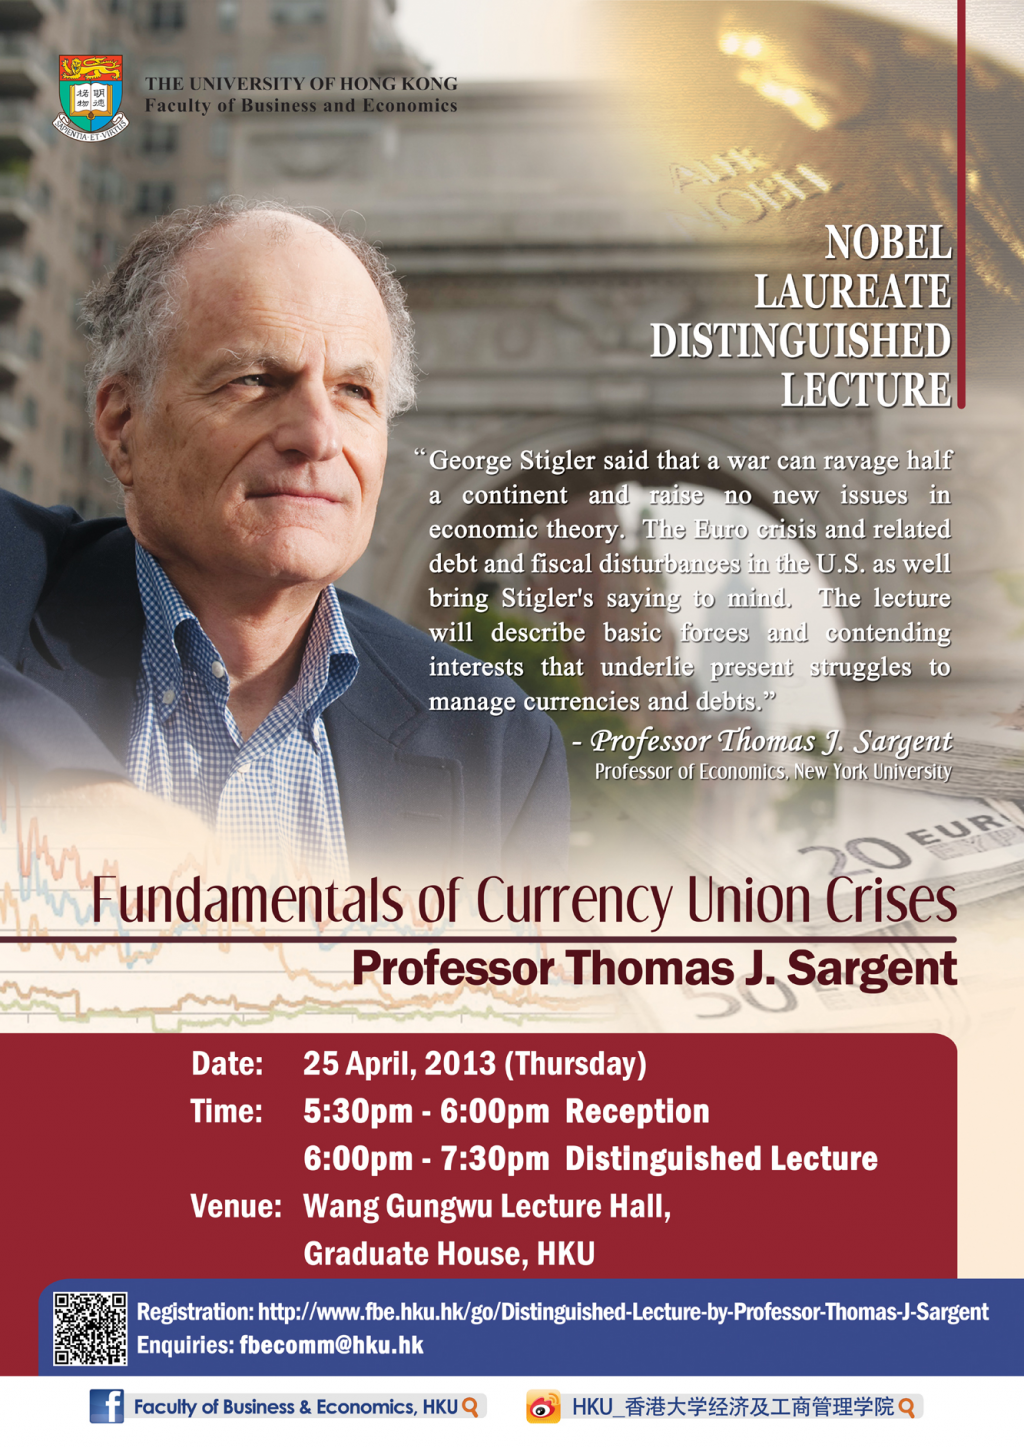 Nobel Laureate Distinguished Lecture by Professor Thomas J. Sargent